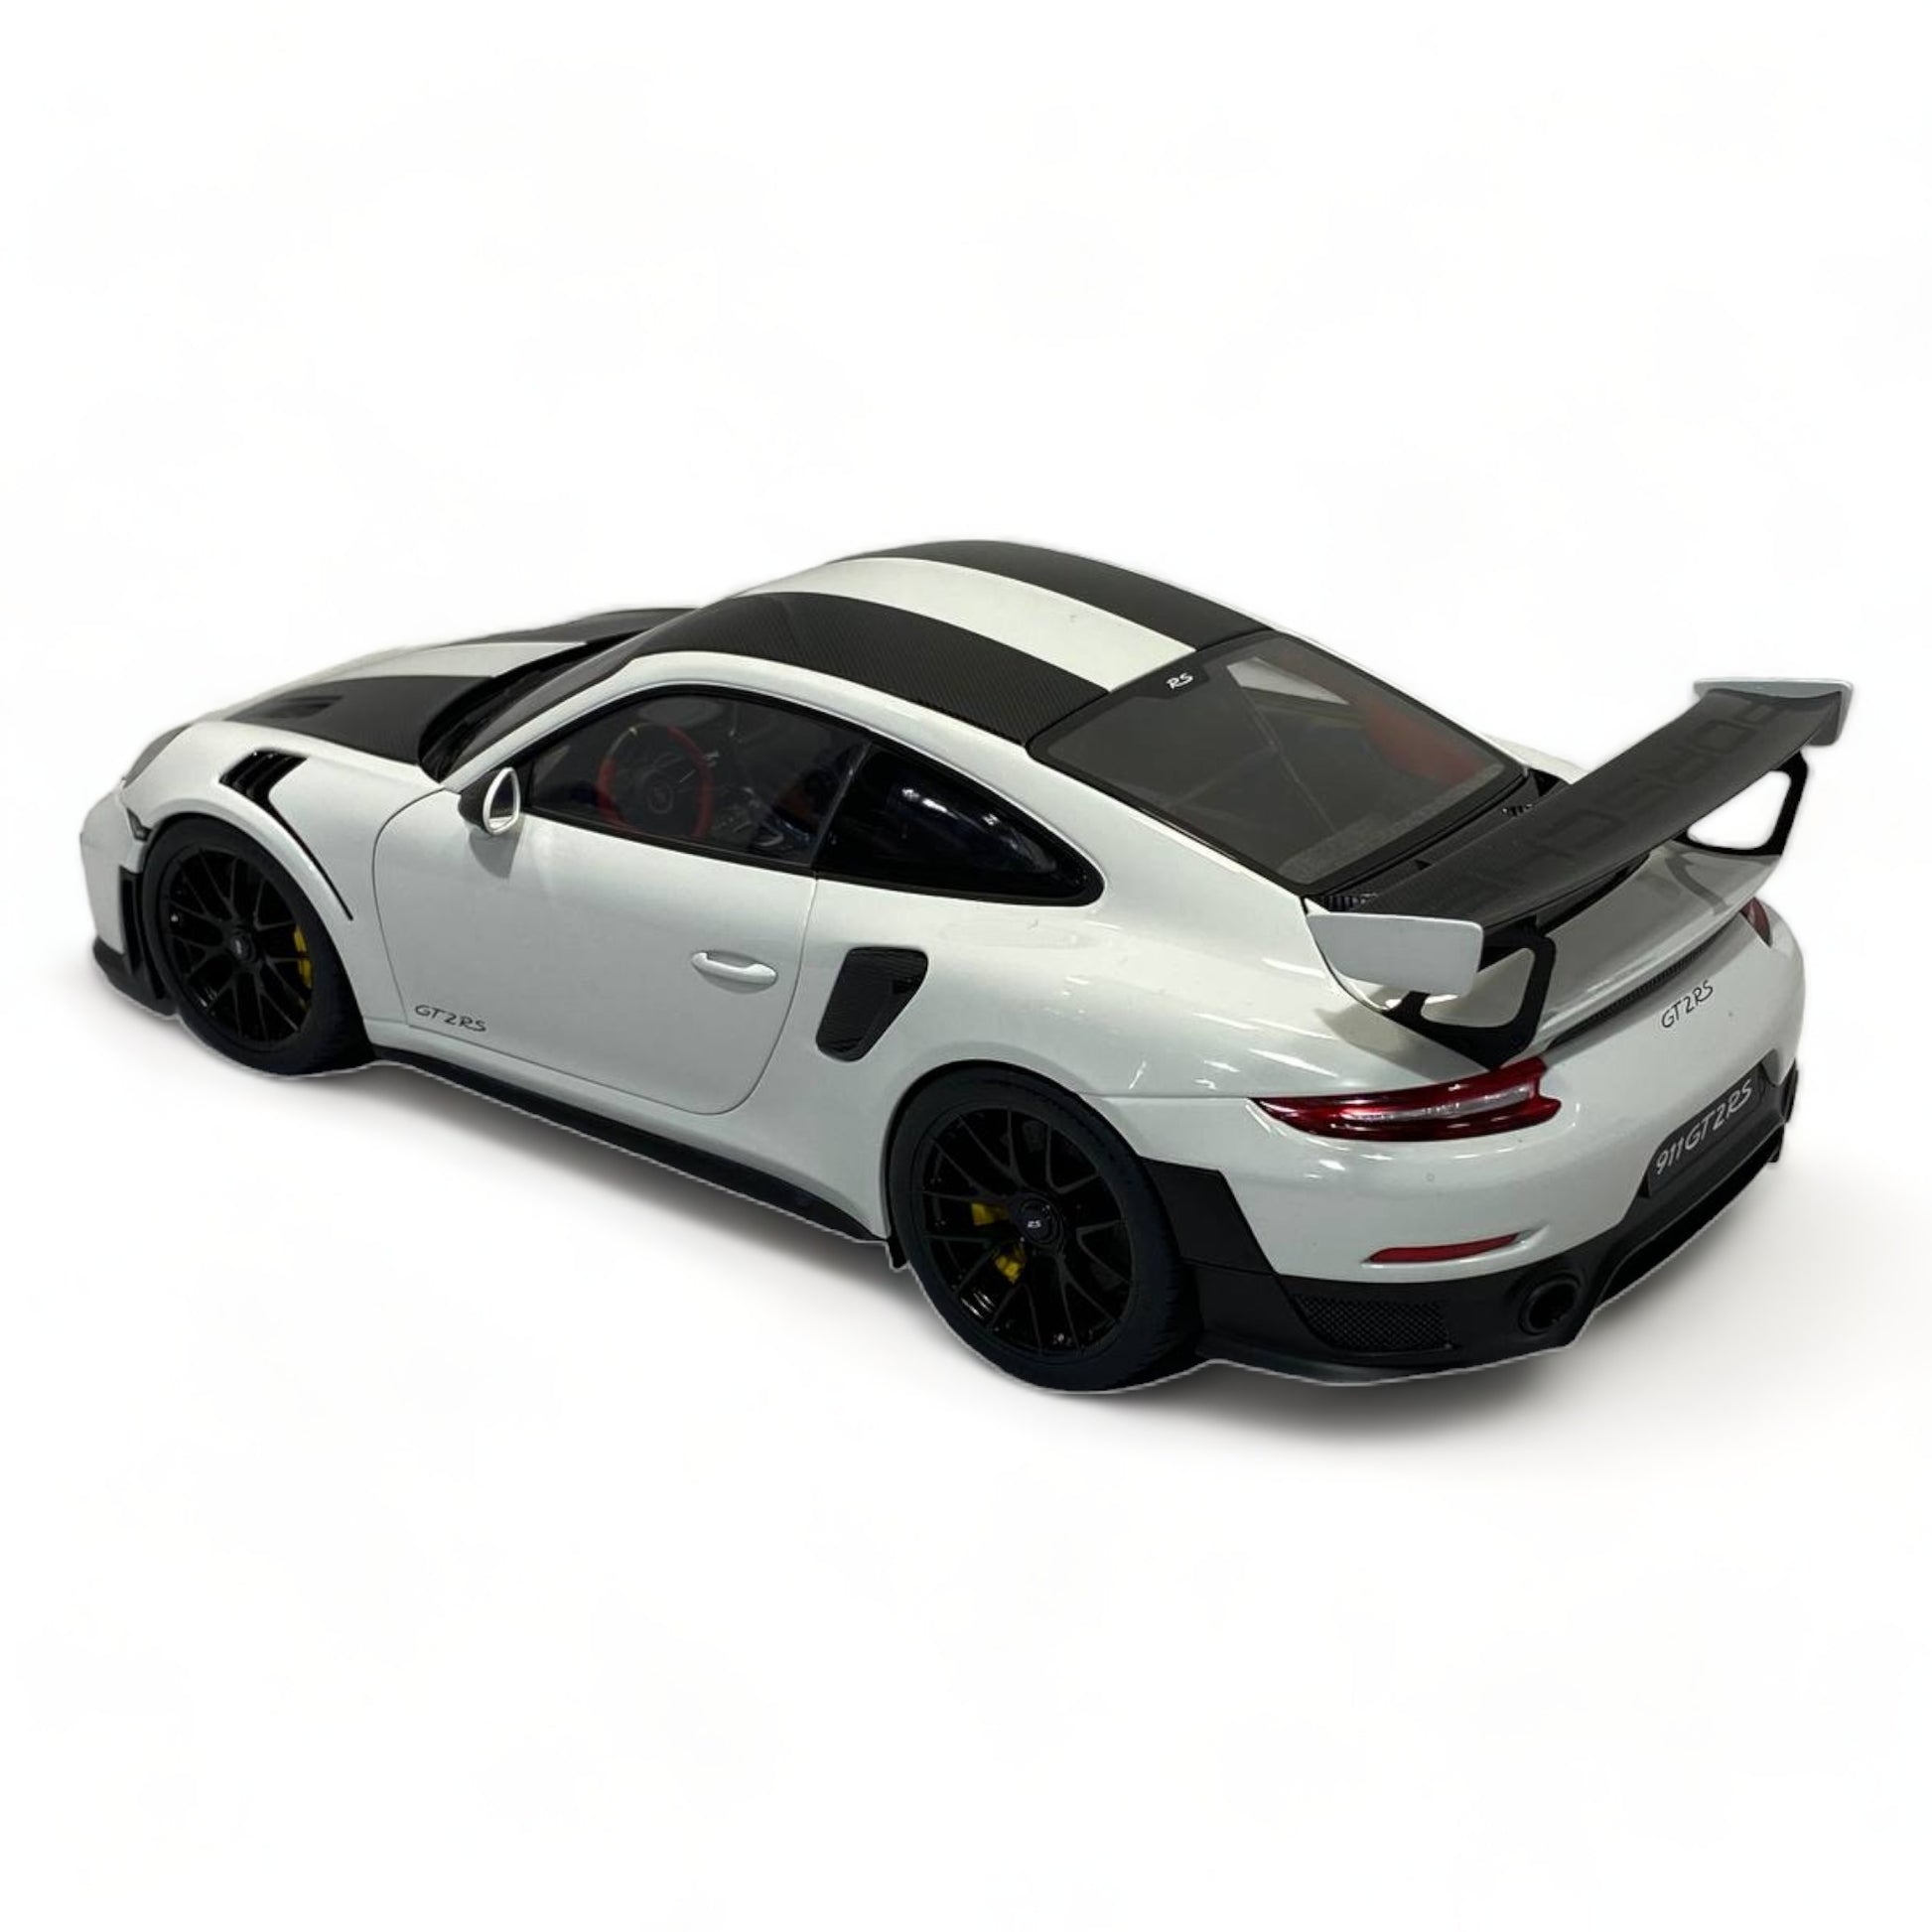 1/18 Diecast Autoart Porsche 911 GT2 RS (991.2) 2017 - White Scale Model Car|Sold in Dturman.com Dubai UAE.